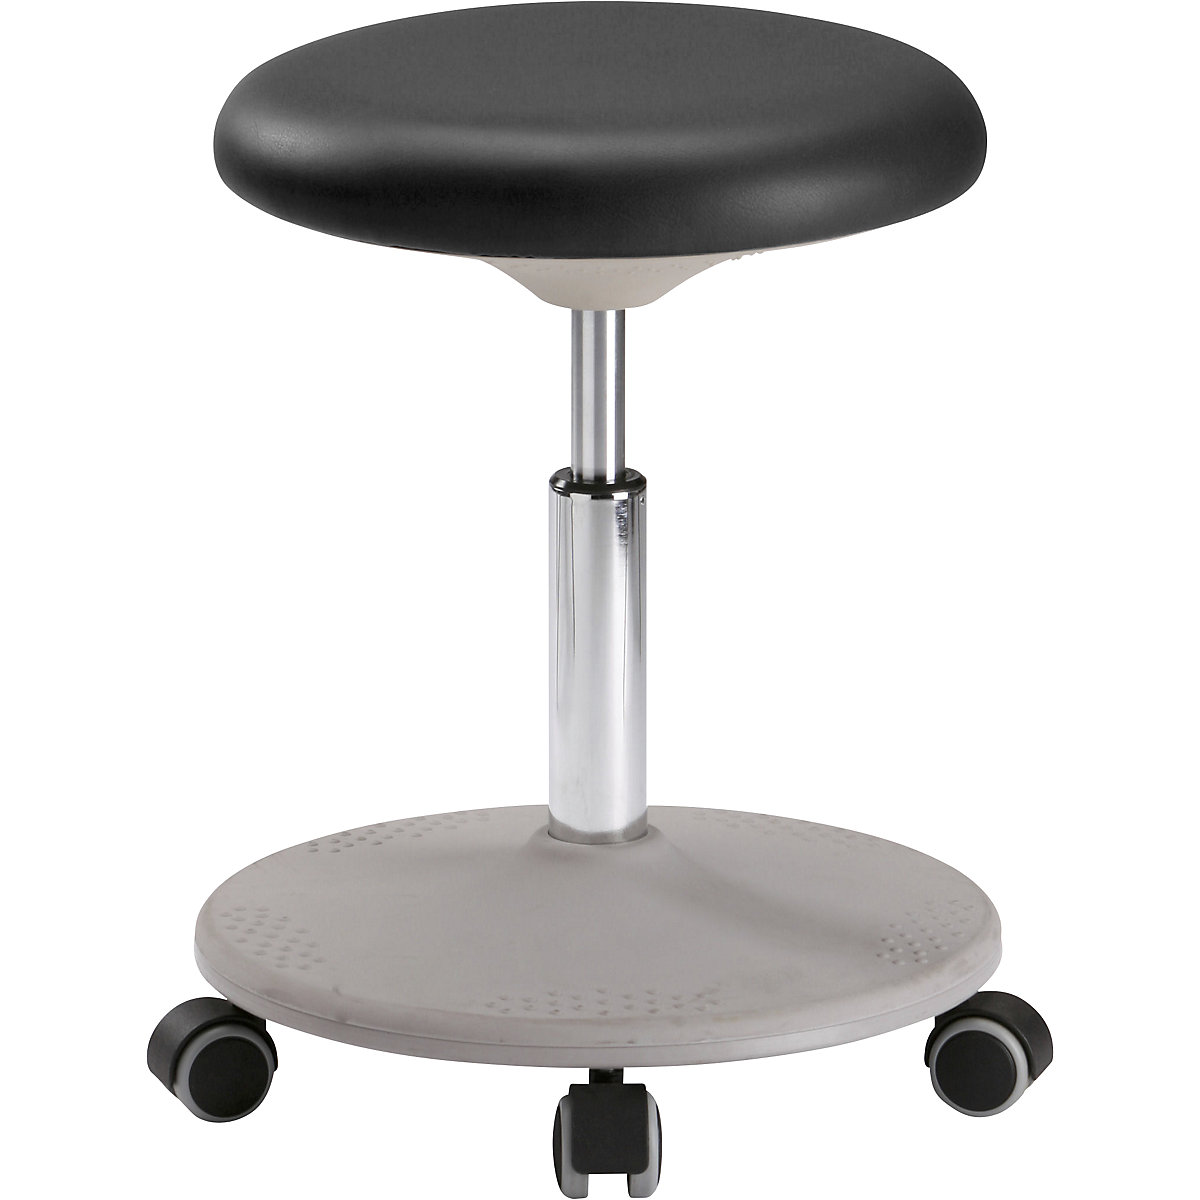 Laboratory stool, height adjustment range 460 - 650 mm - bimos